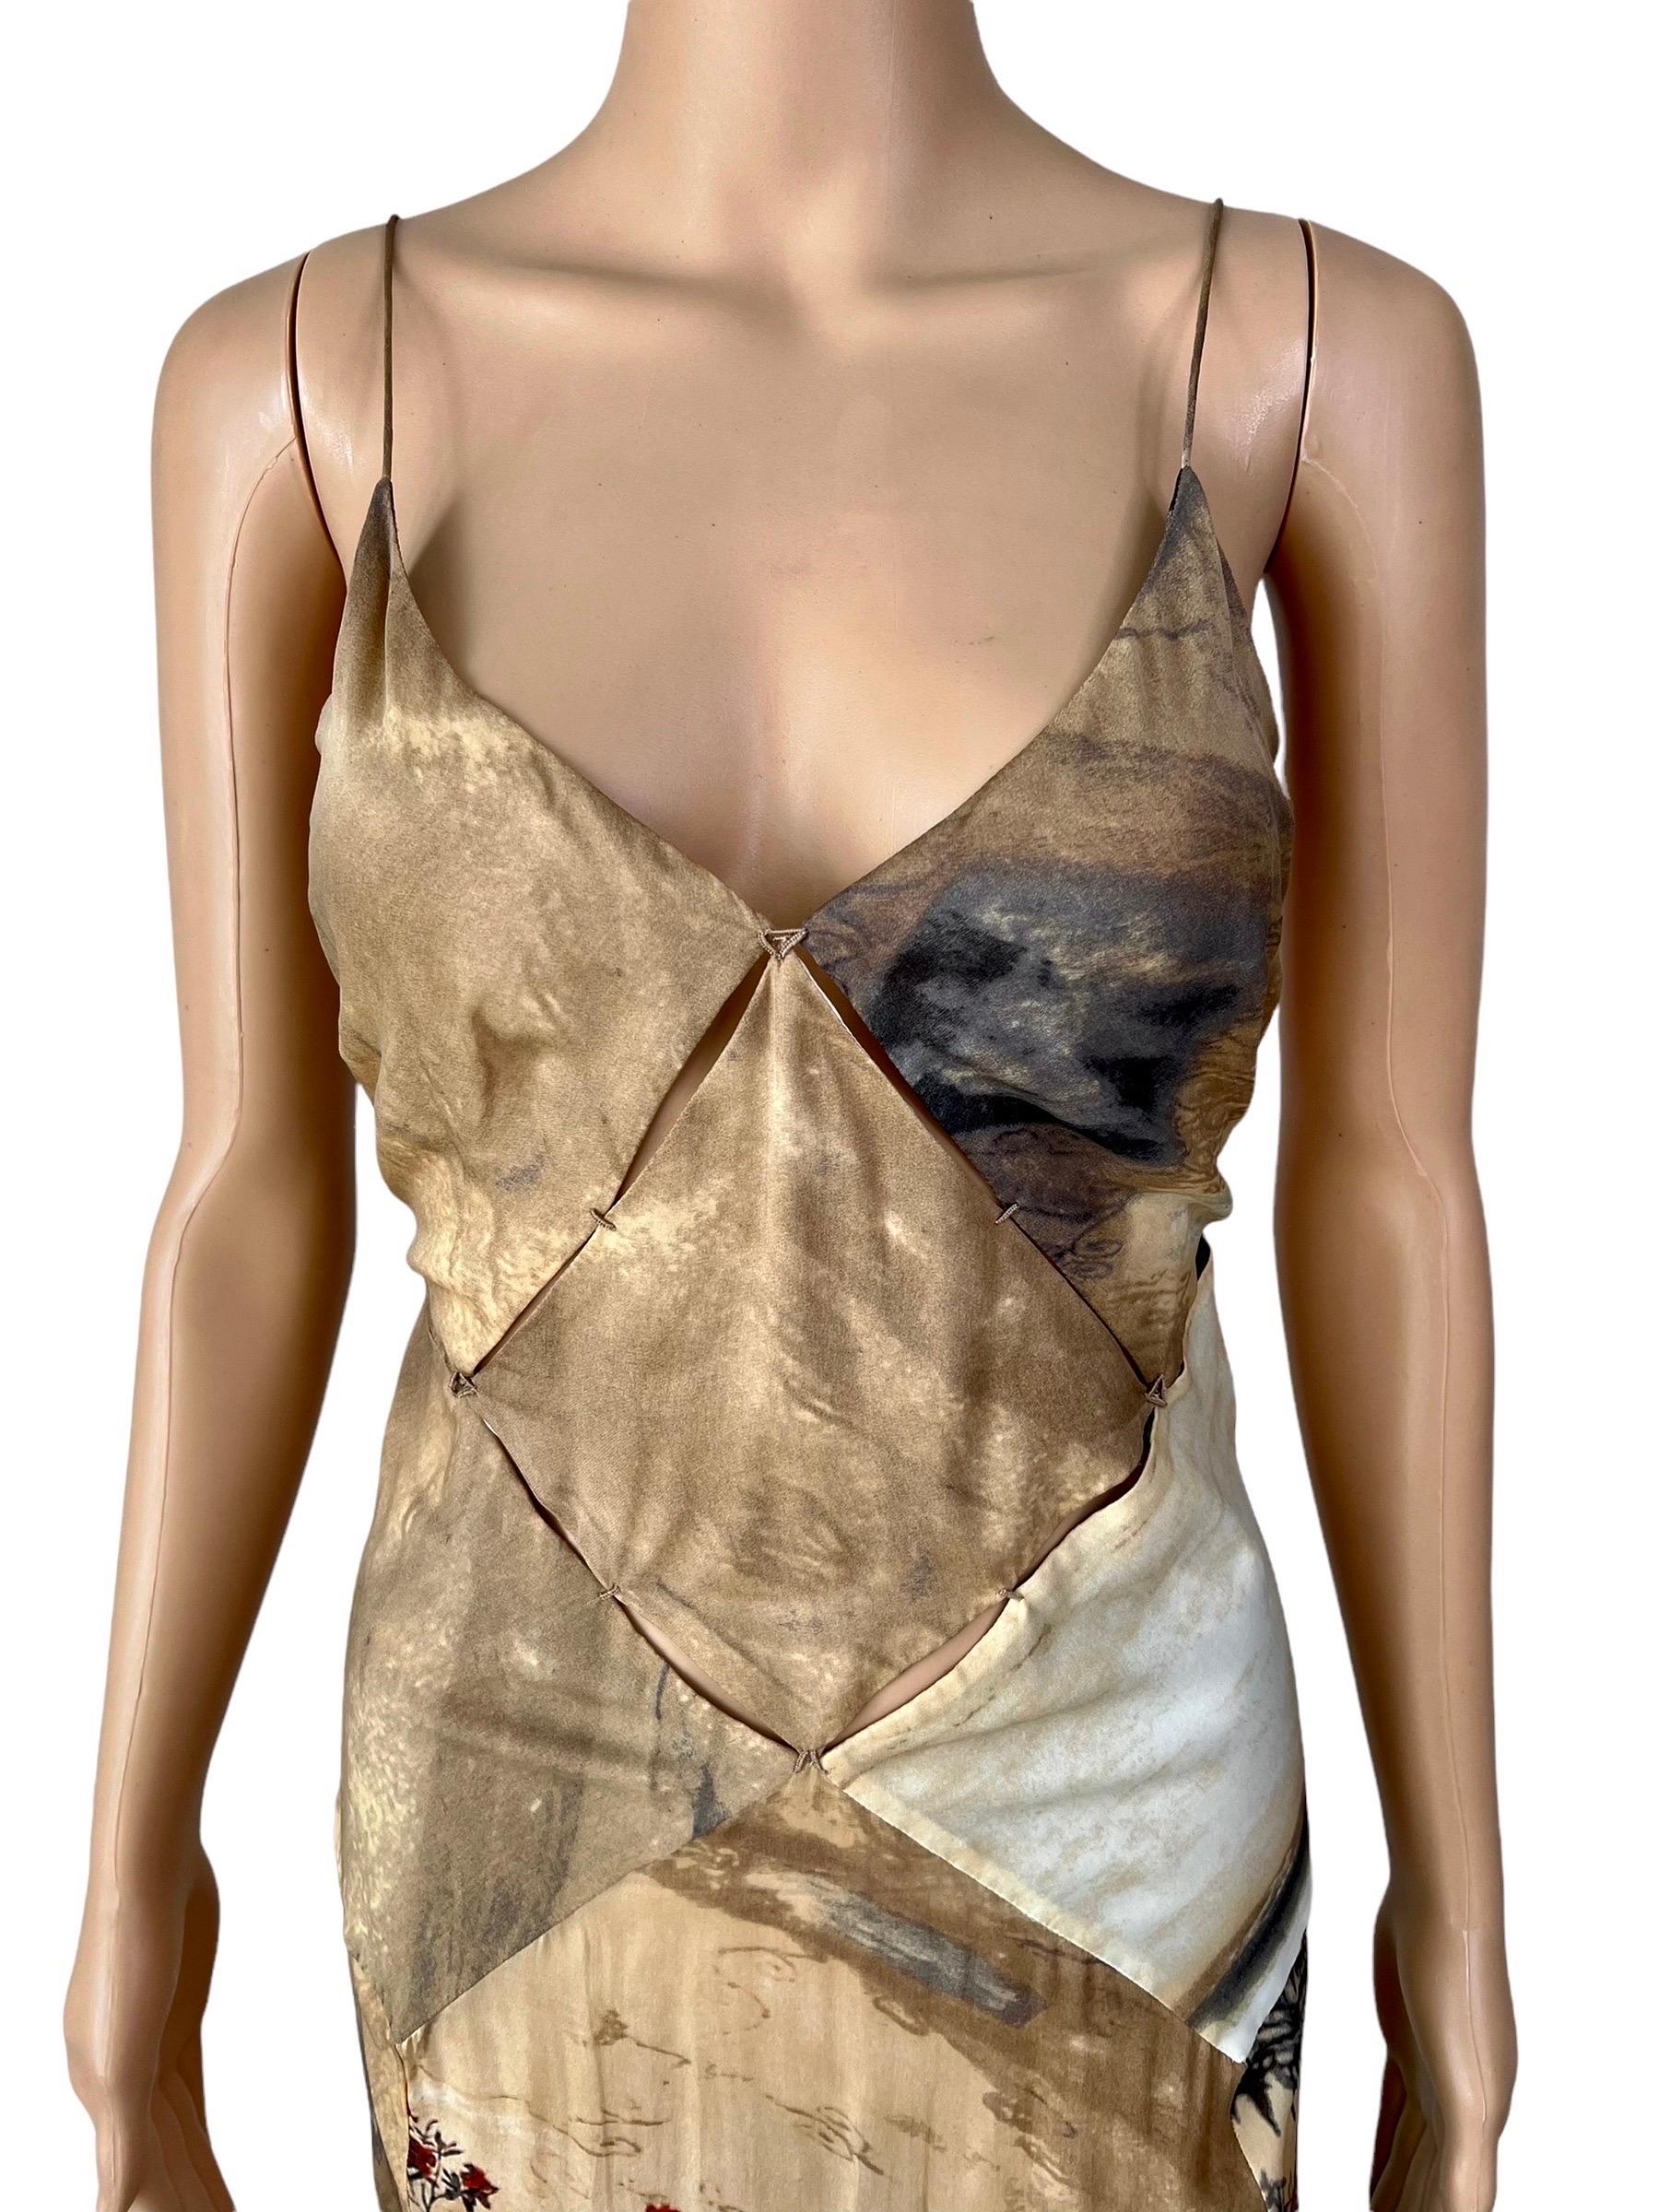 Roberto Cavalli S/S 2004 Runway Cutout High Slit Silk Slip Evening Dress Gown For Sale 7